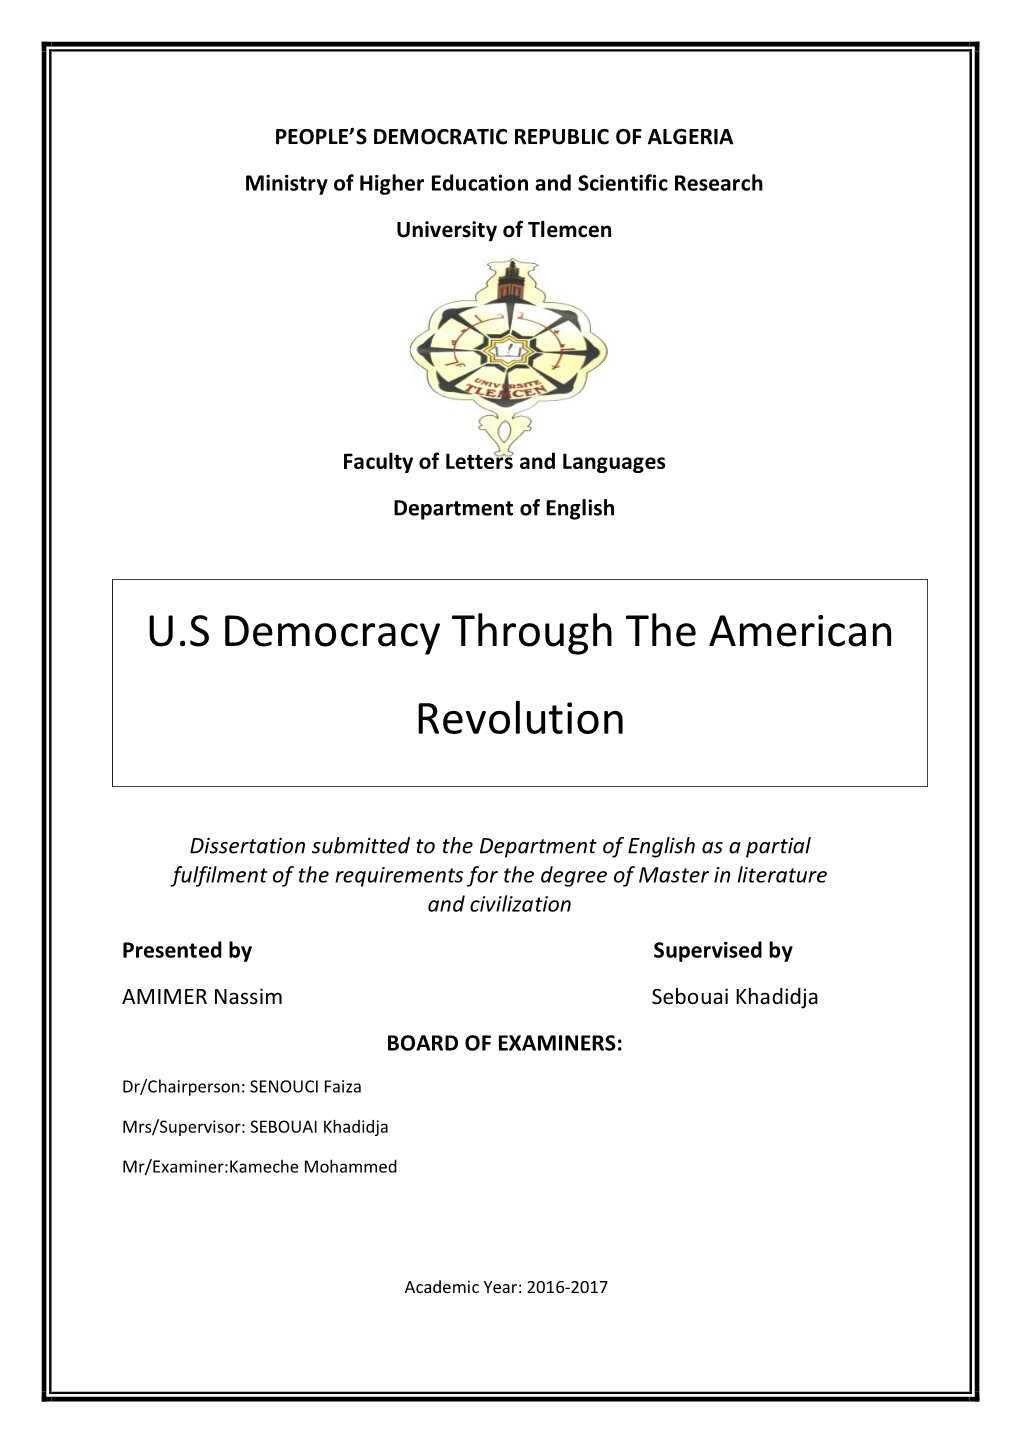 U.S Democracy Through the American Revolution